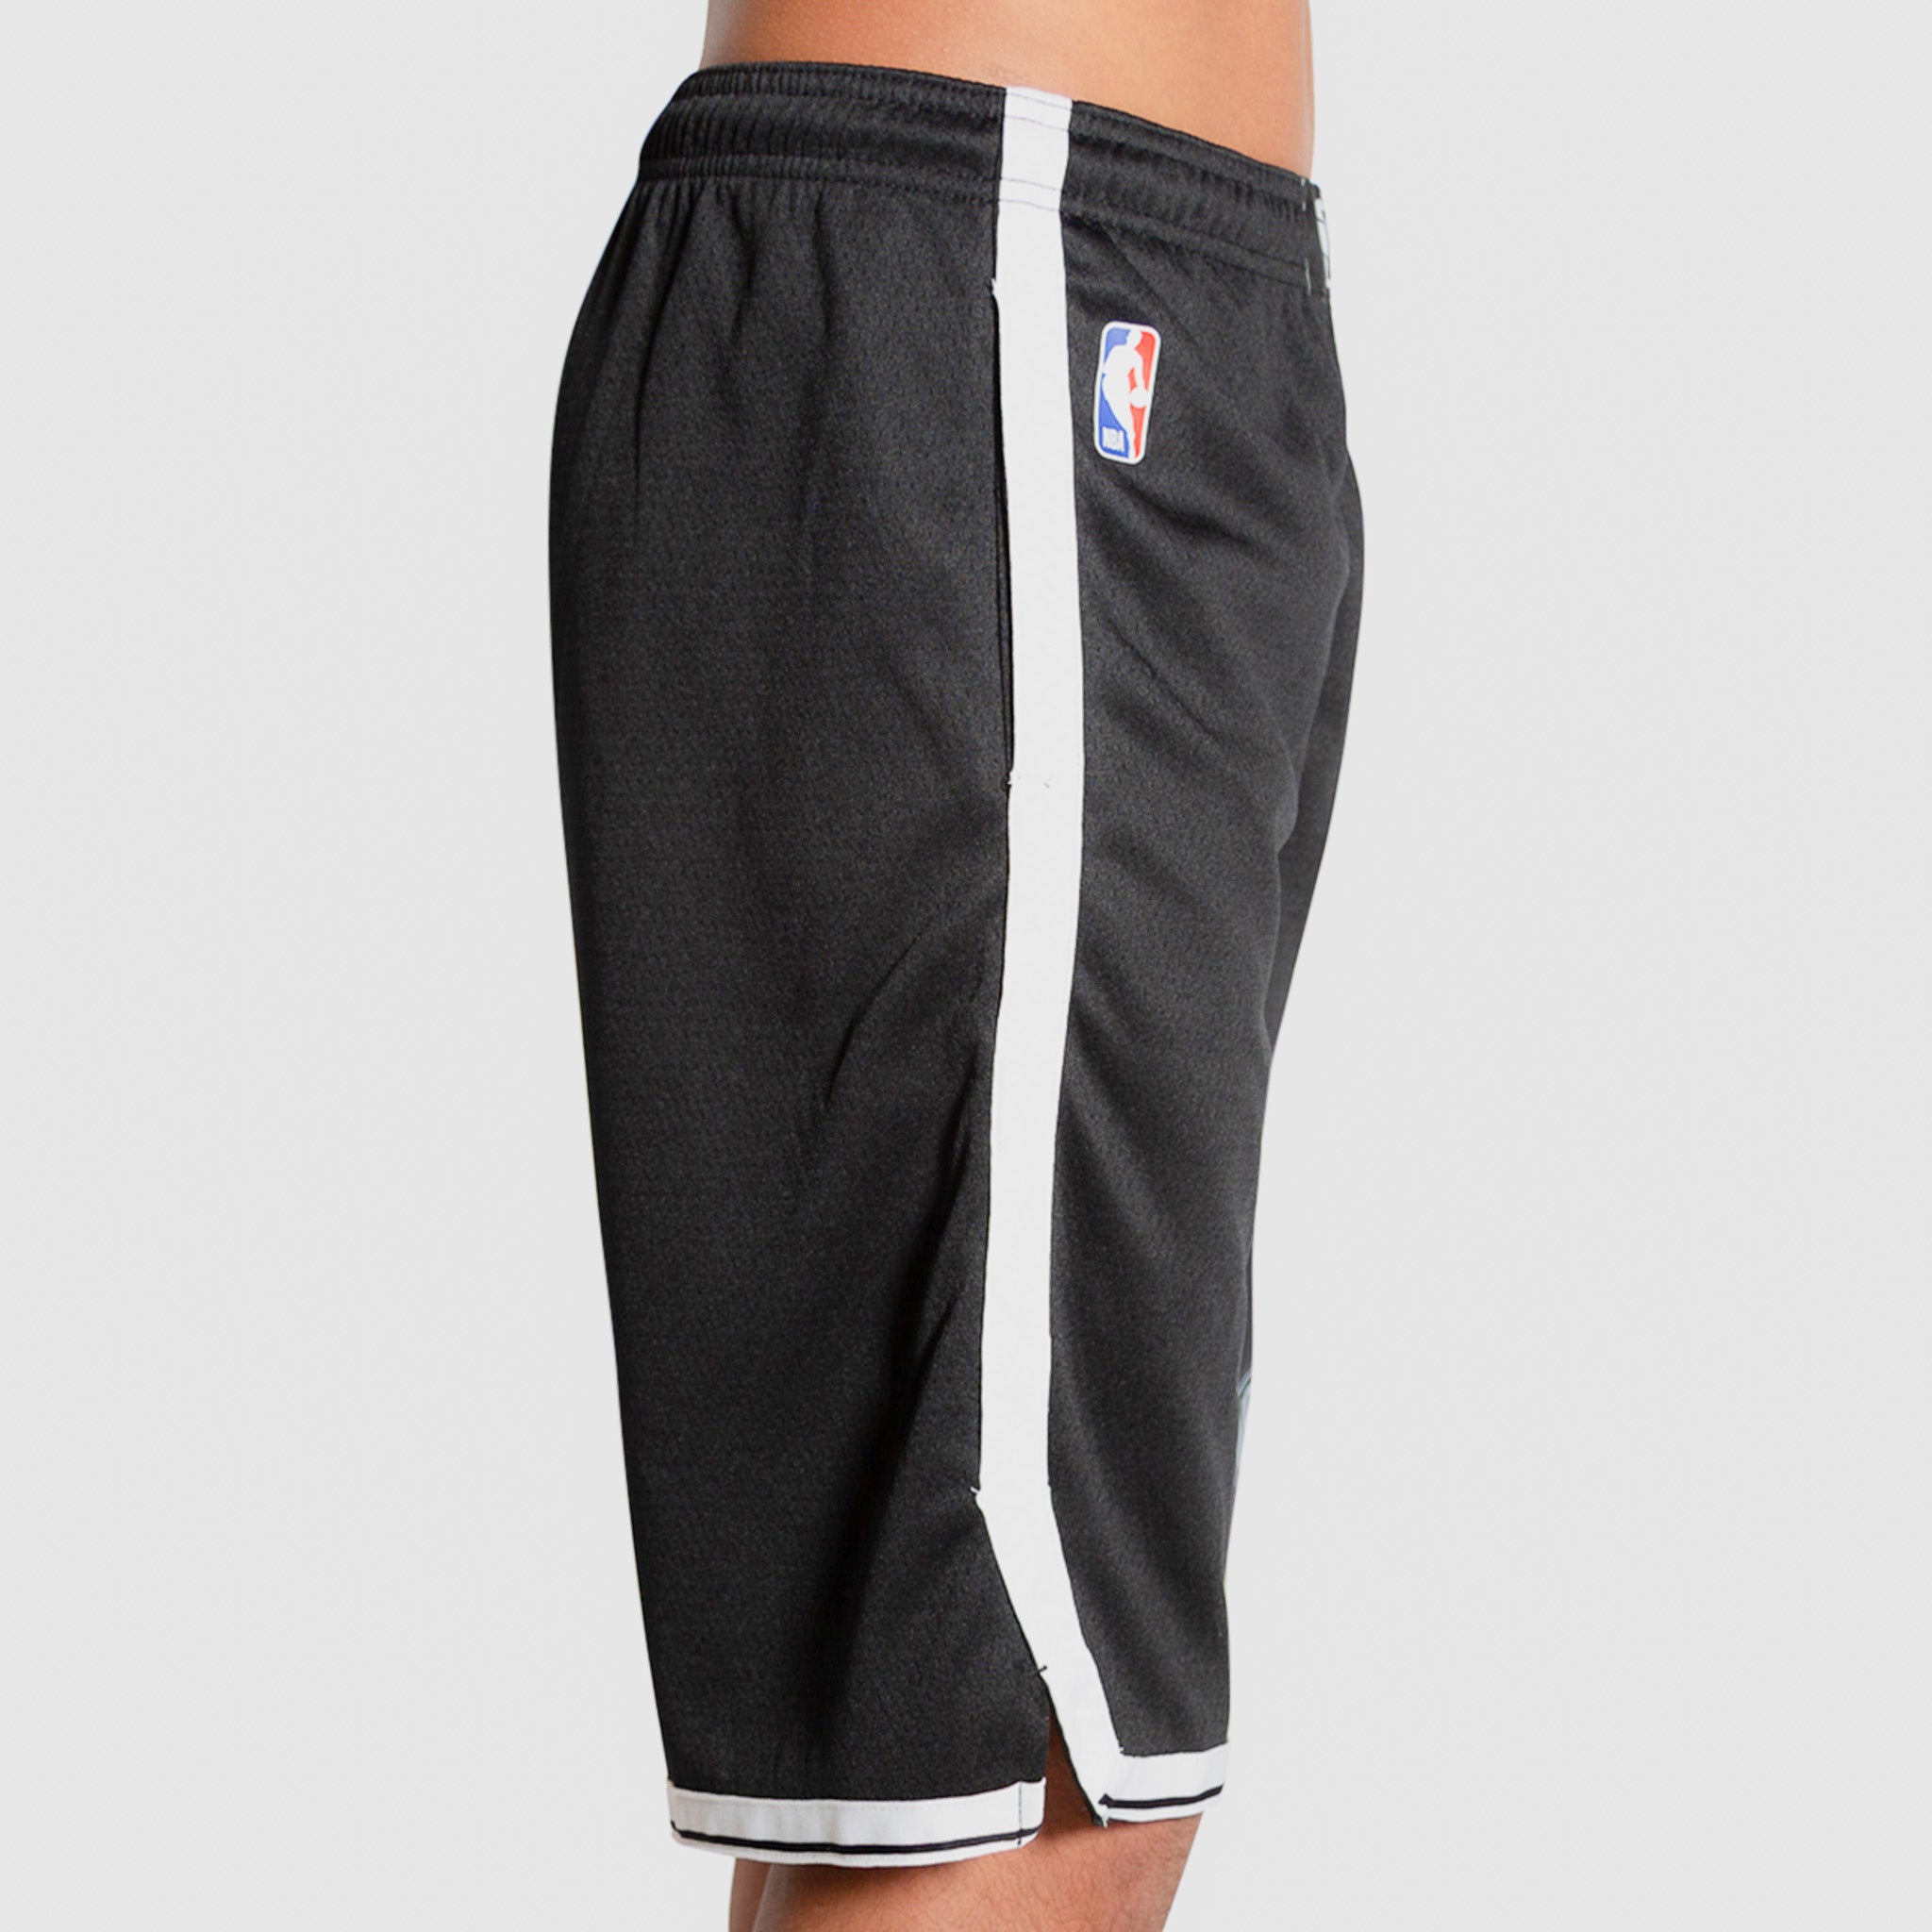 Outerstuff NBA Brooklyn Nets Hard Cut Shorts - Youth